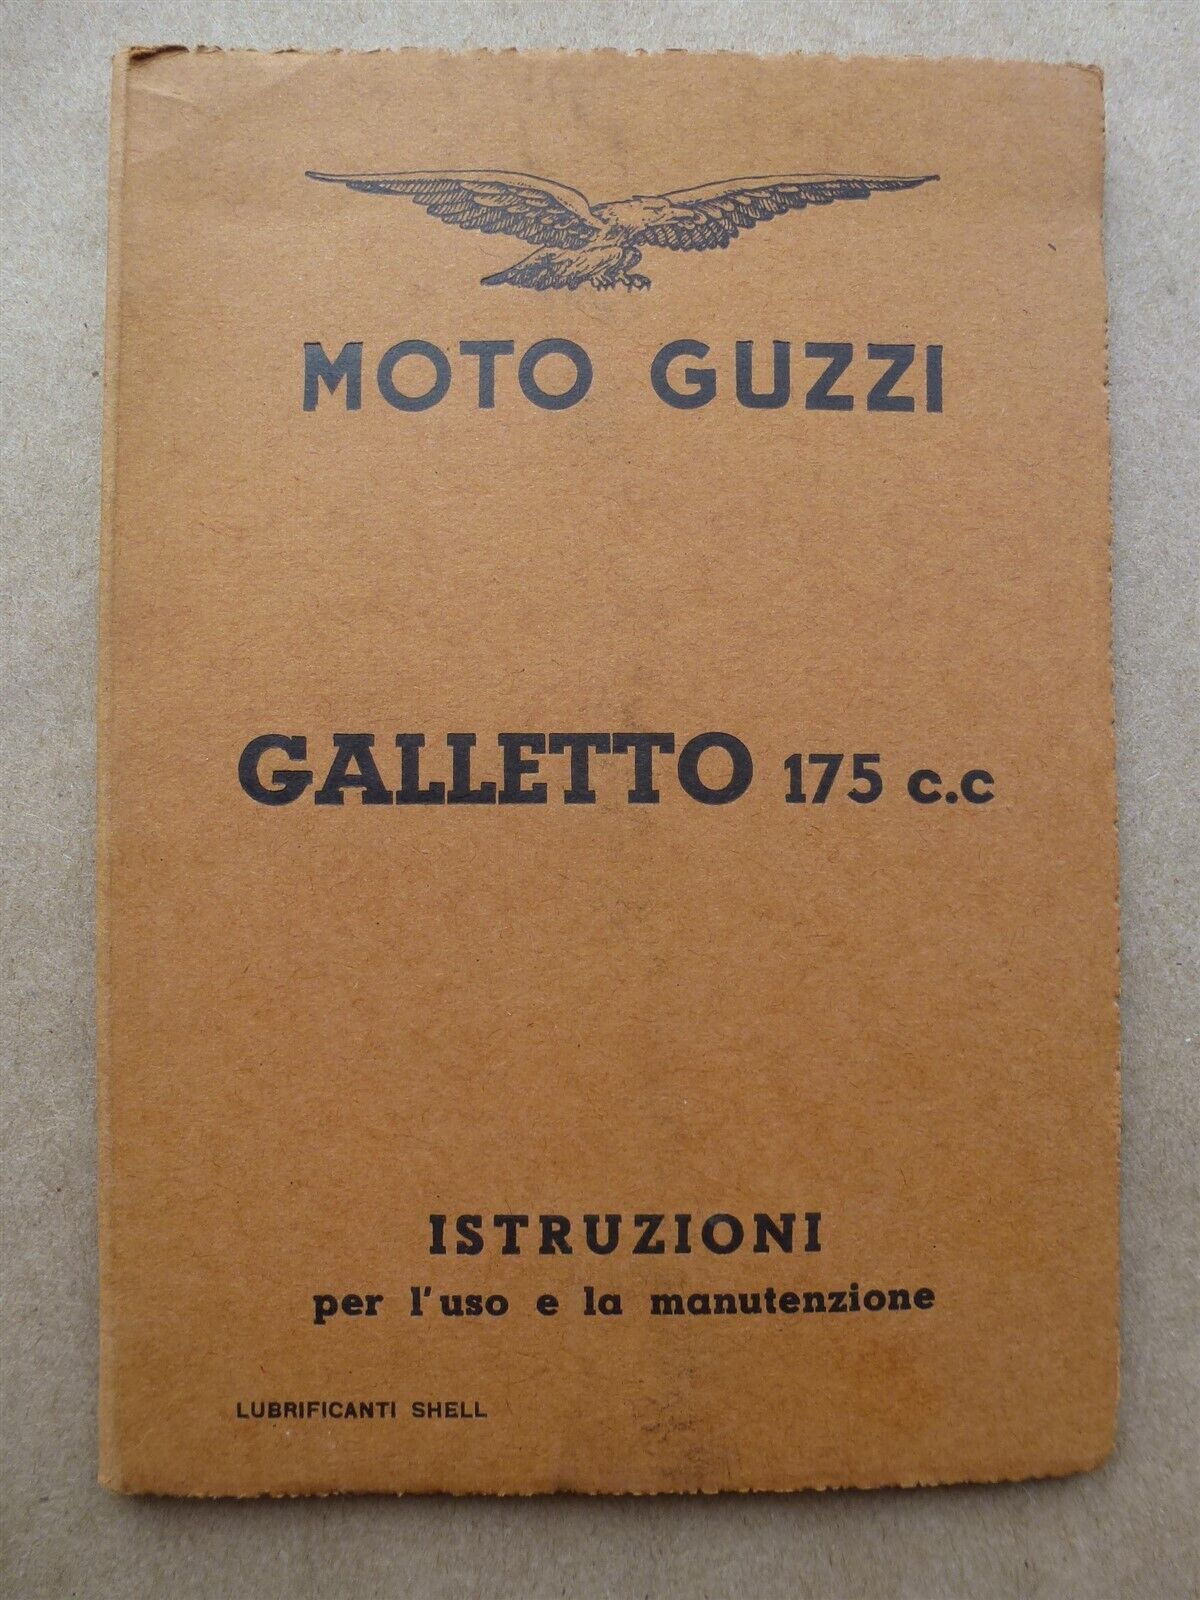 Moto Guzzi motorcycle Motociclo Galletto 175 c.c. Instruction manual 1953 June